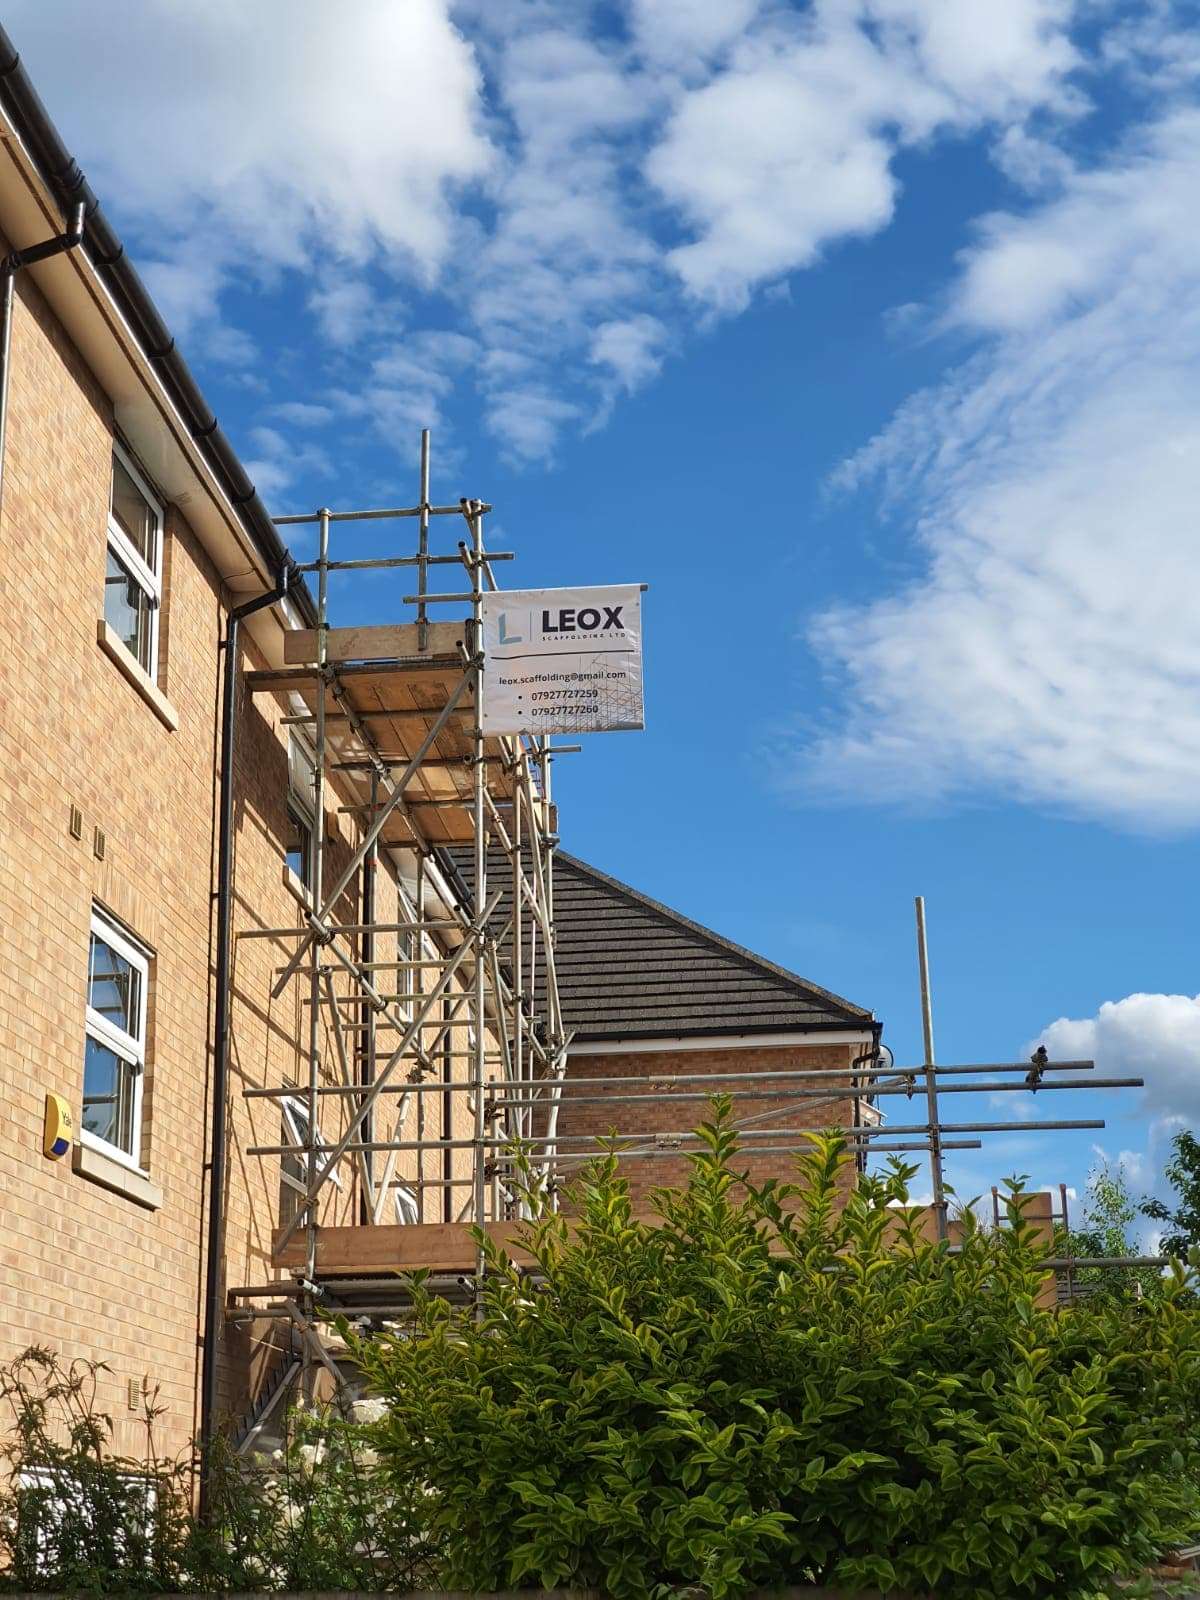 scaffolding company London and blue sky